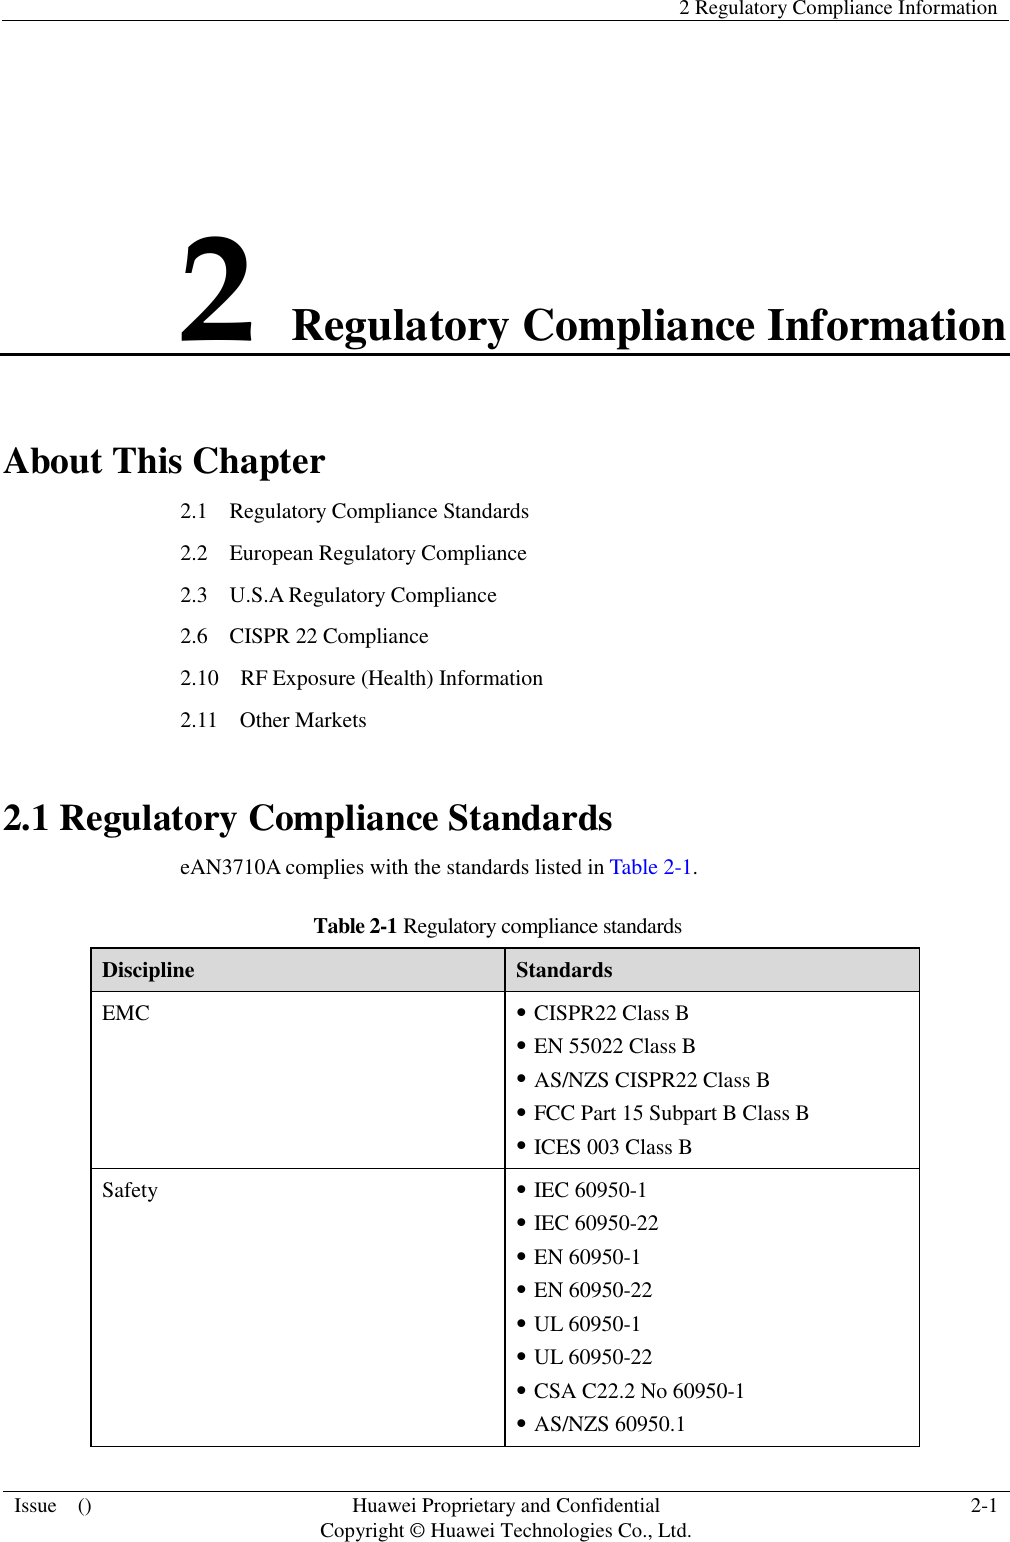   2 Regulatory Compliance Information  Issue    () Huawei Proprietary and Confidential                                     Copyright © Huawei Technologies Co., Ltd. 2-1  2 Regulatory Compliance Information About This Chapter 2.1    Regulatory Compliance Standards 2.2    European Regulatory Compliance 2.3    U.S.A Regulatory Compliance 2.6  CISPR 22 Compliance 2.10    RF Exposure (Health) Information 2.11    Other Markets 2.1 Regulatory Compliance Standards eAN3710A complies with the standards listed in Table 2-1. Table 2-1 Regulatory compliance standards Discipline Standards EMC  CISPR22 Class B  EN 55022 Class B  AS/NZS CISPR22 Class B  FCC Part 15 Subpart B Class B  ICES 003 Class B Safety  IEC 60950-1  IEC 60950-22  EN 60950-1  EN 60950-22  UL 60950-1  UL 60950-22  CSA C22.2 No 60950-1  AS/NZS 60950.1 